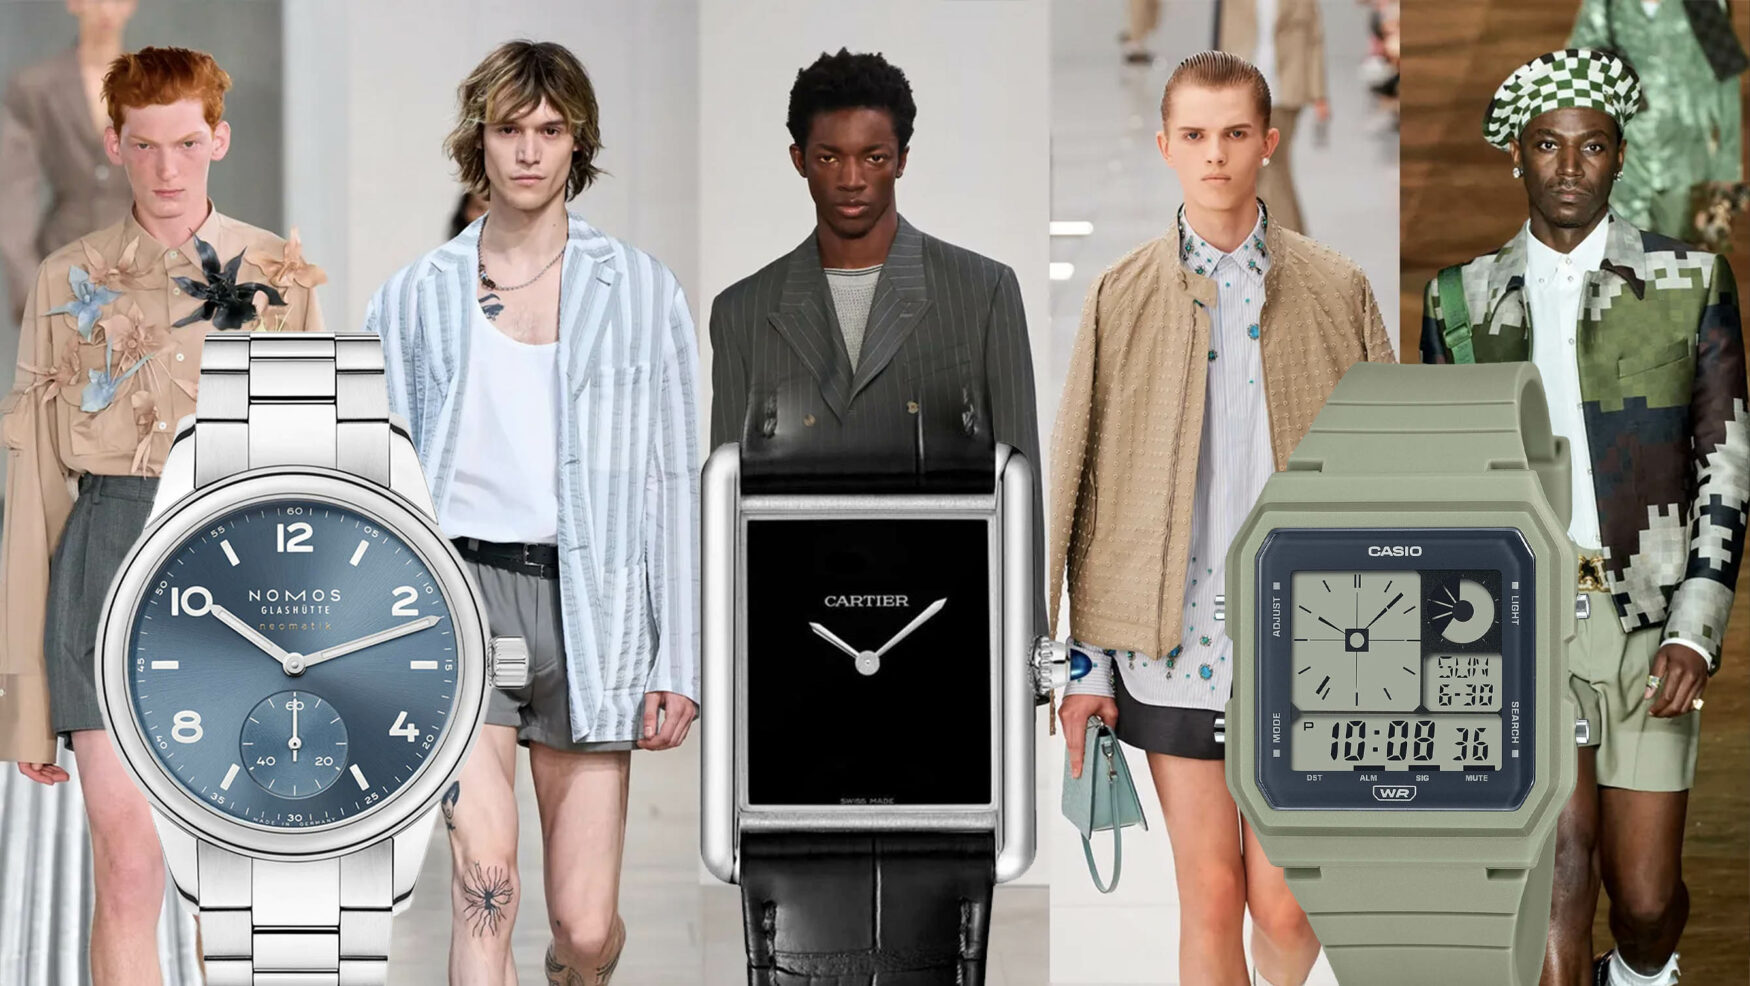 Watch nerd hobbies fashion desktop